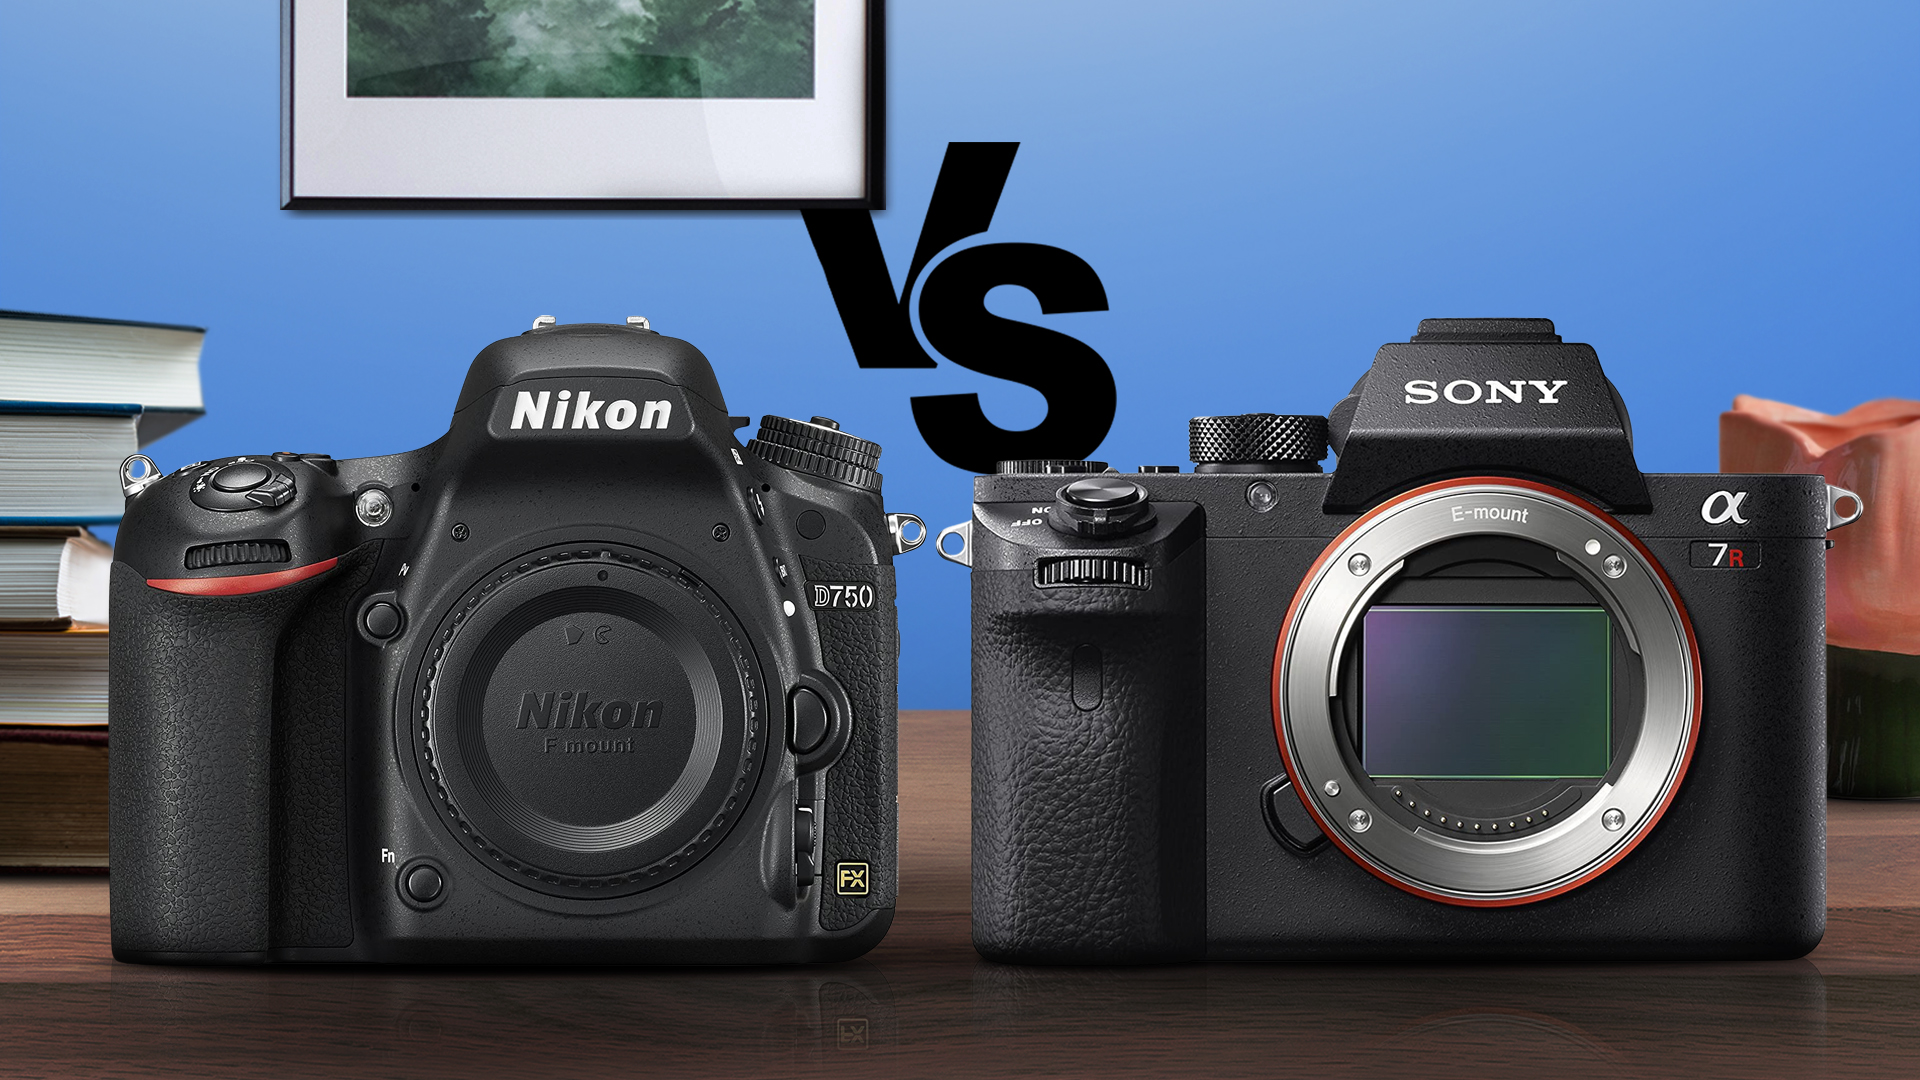 Nikon D750 vs Sony A7R II